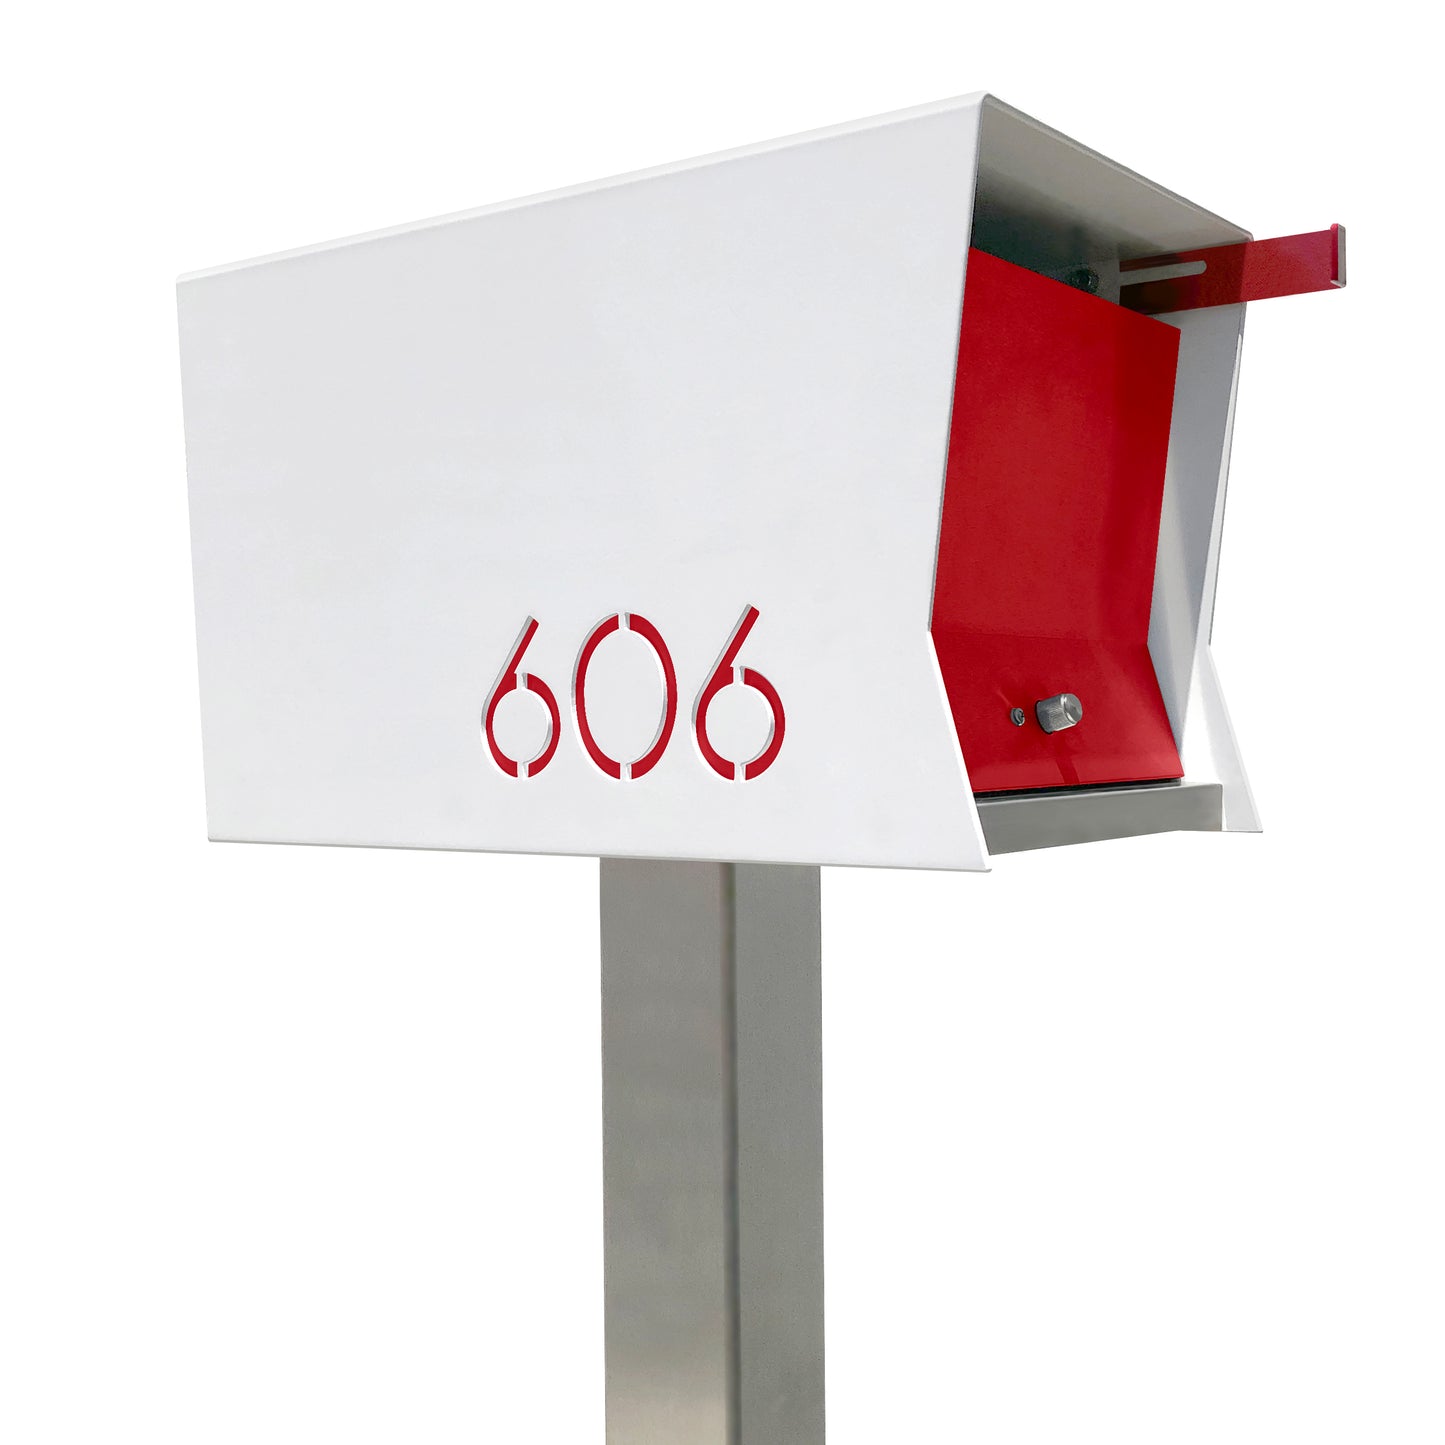 The Original Retrobox in ARCTIC WHITE - Modern Mailbox red and white